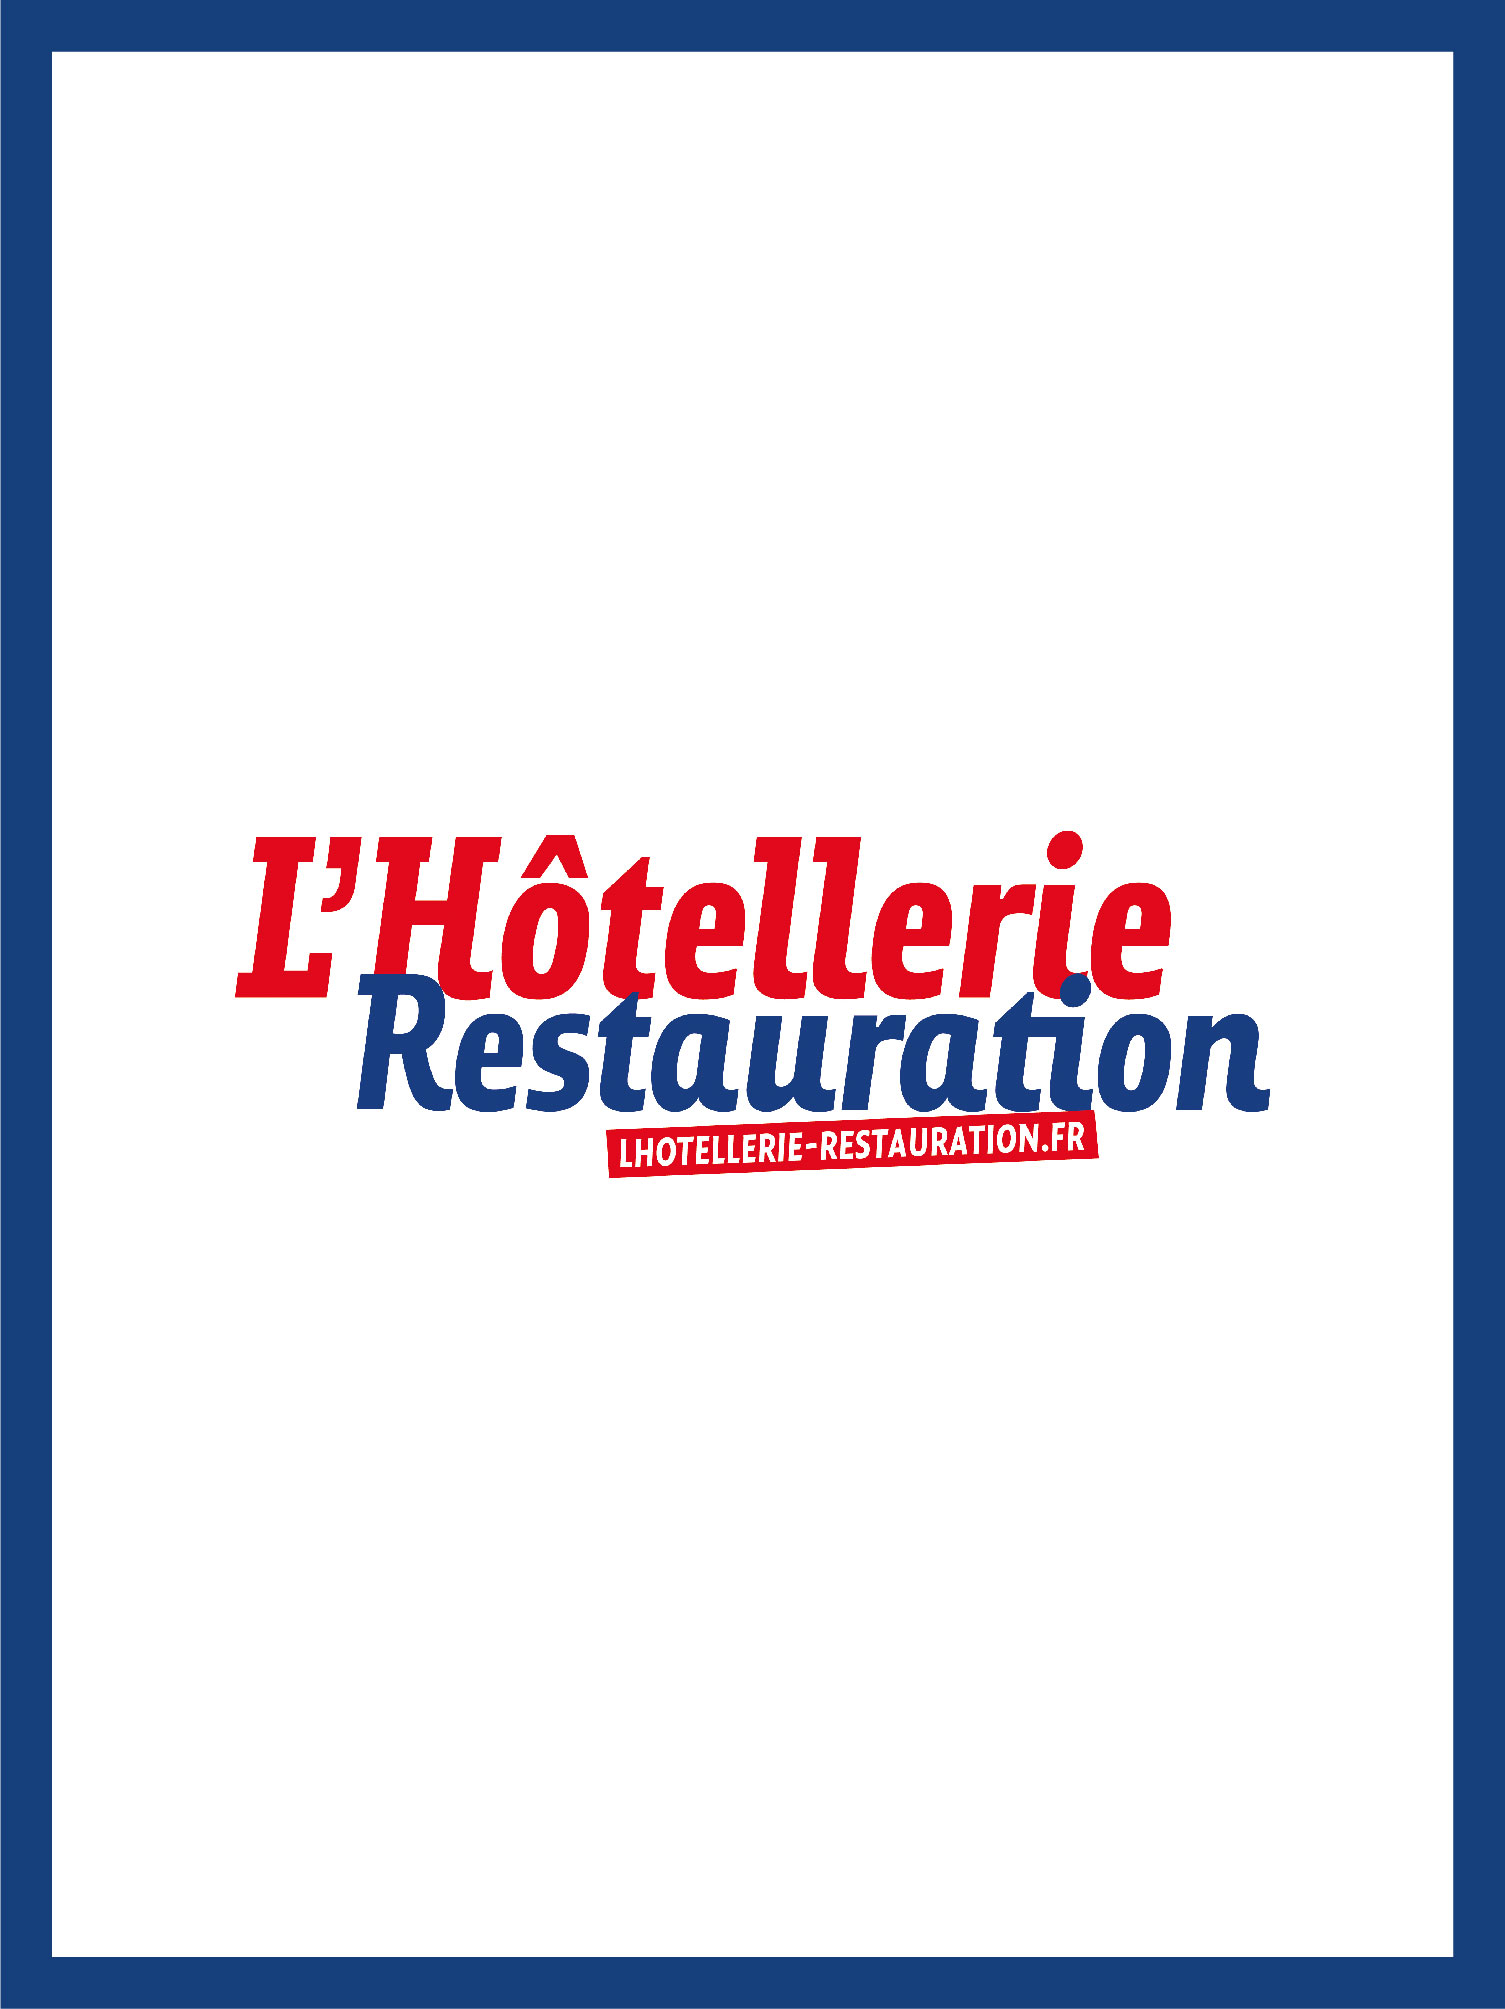 logo of the magzine hotellerie restauration 2021